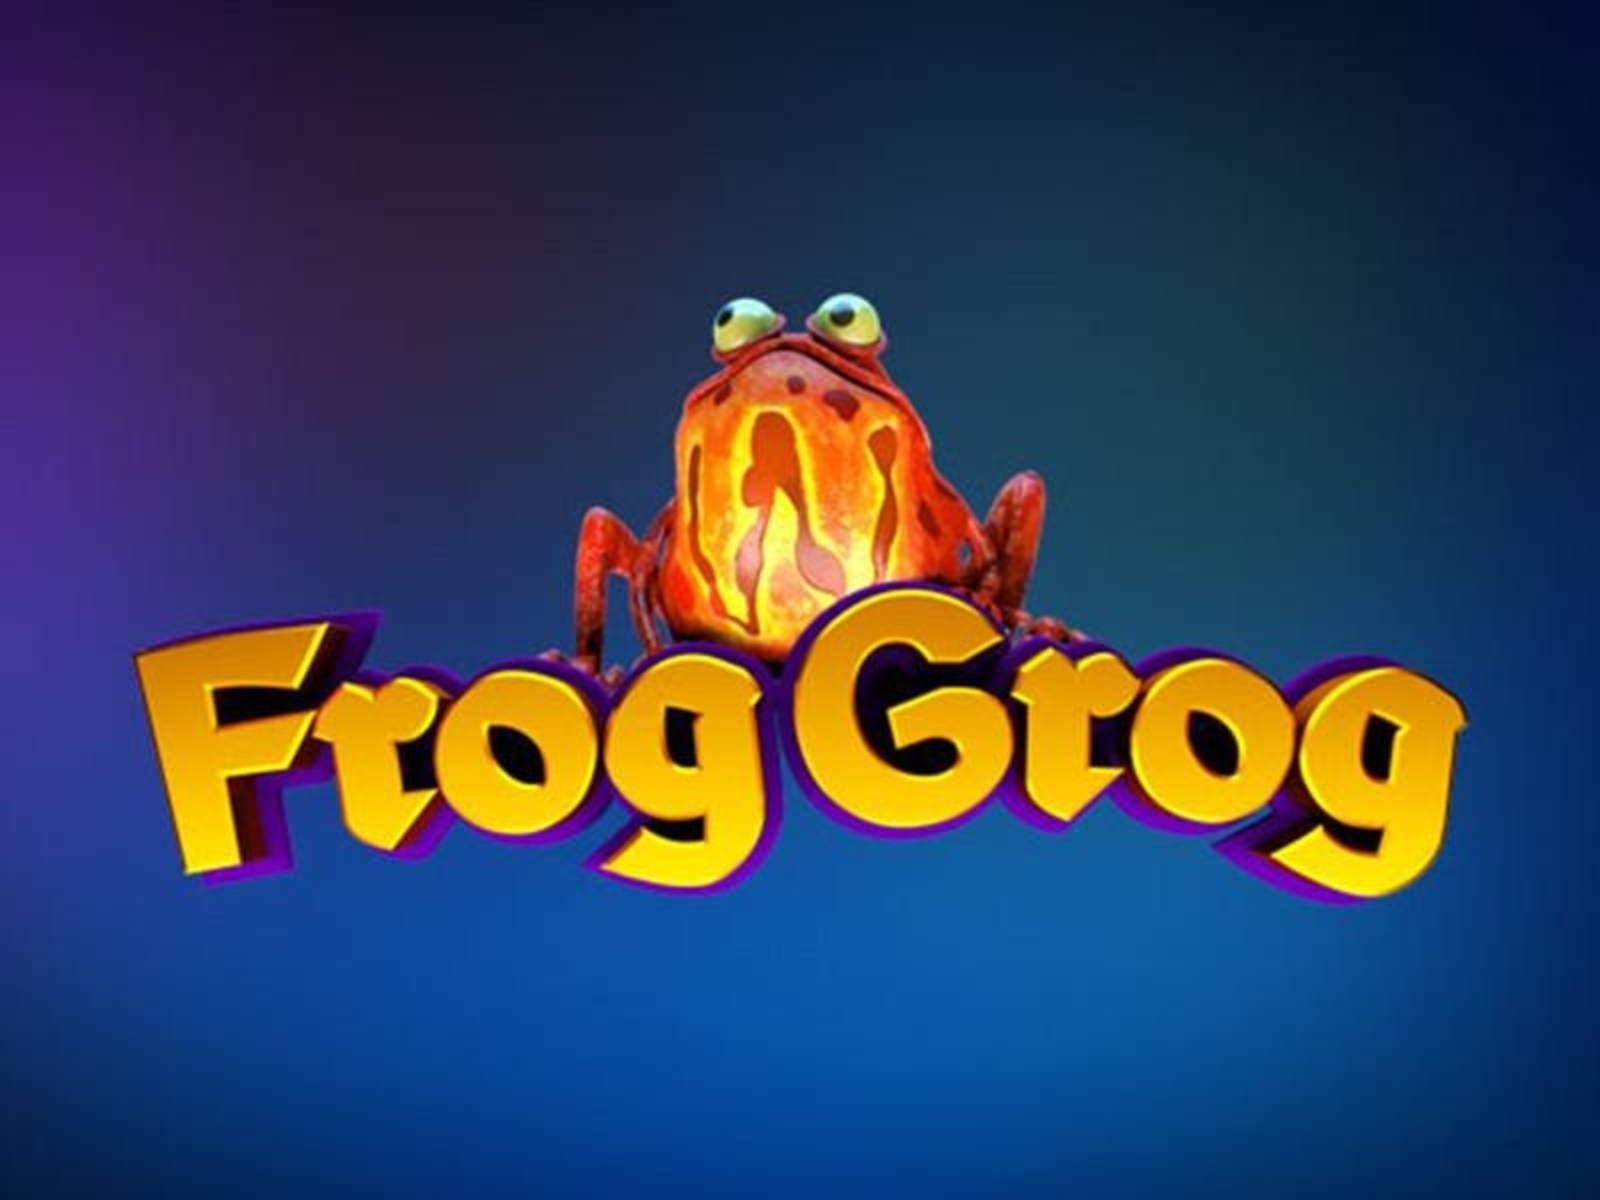 Frog Grog demo